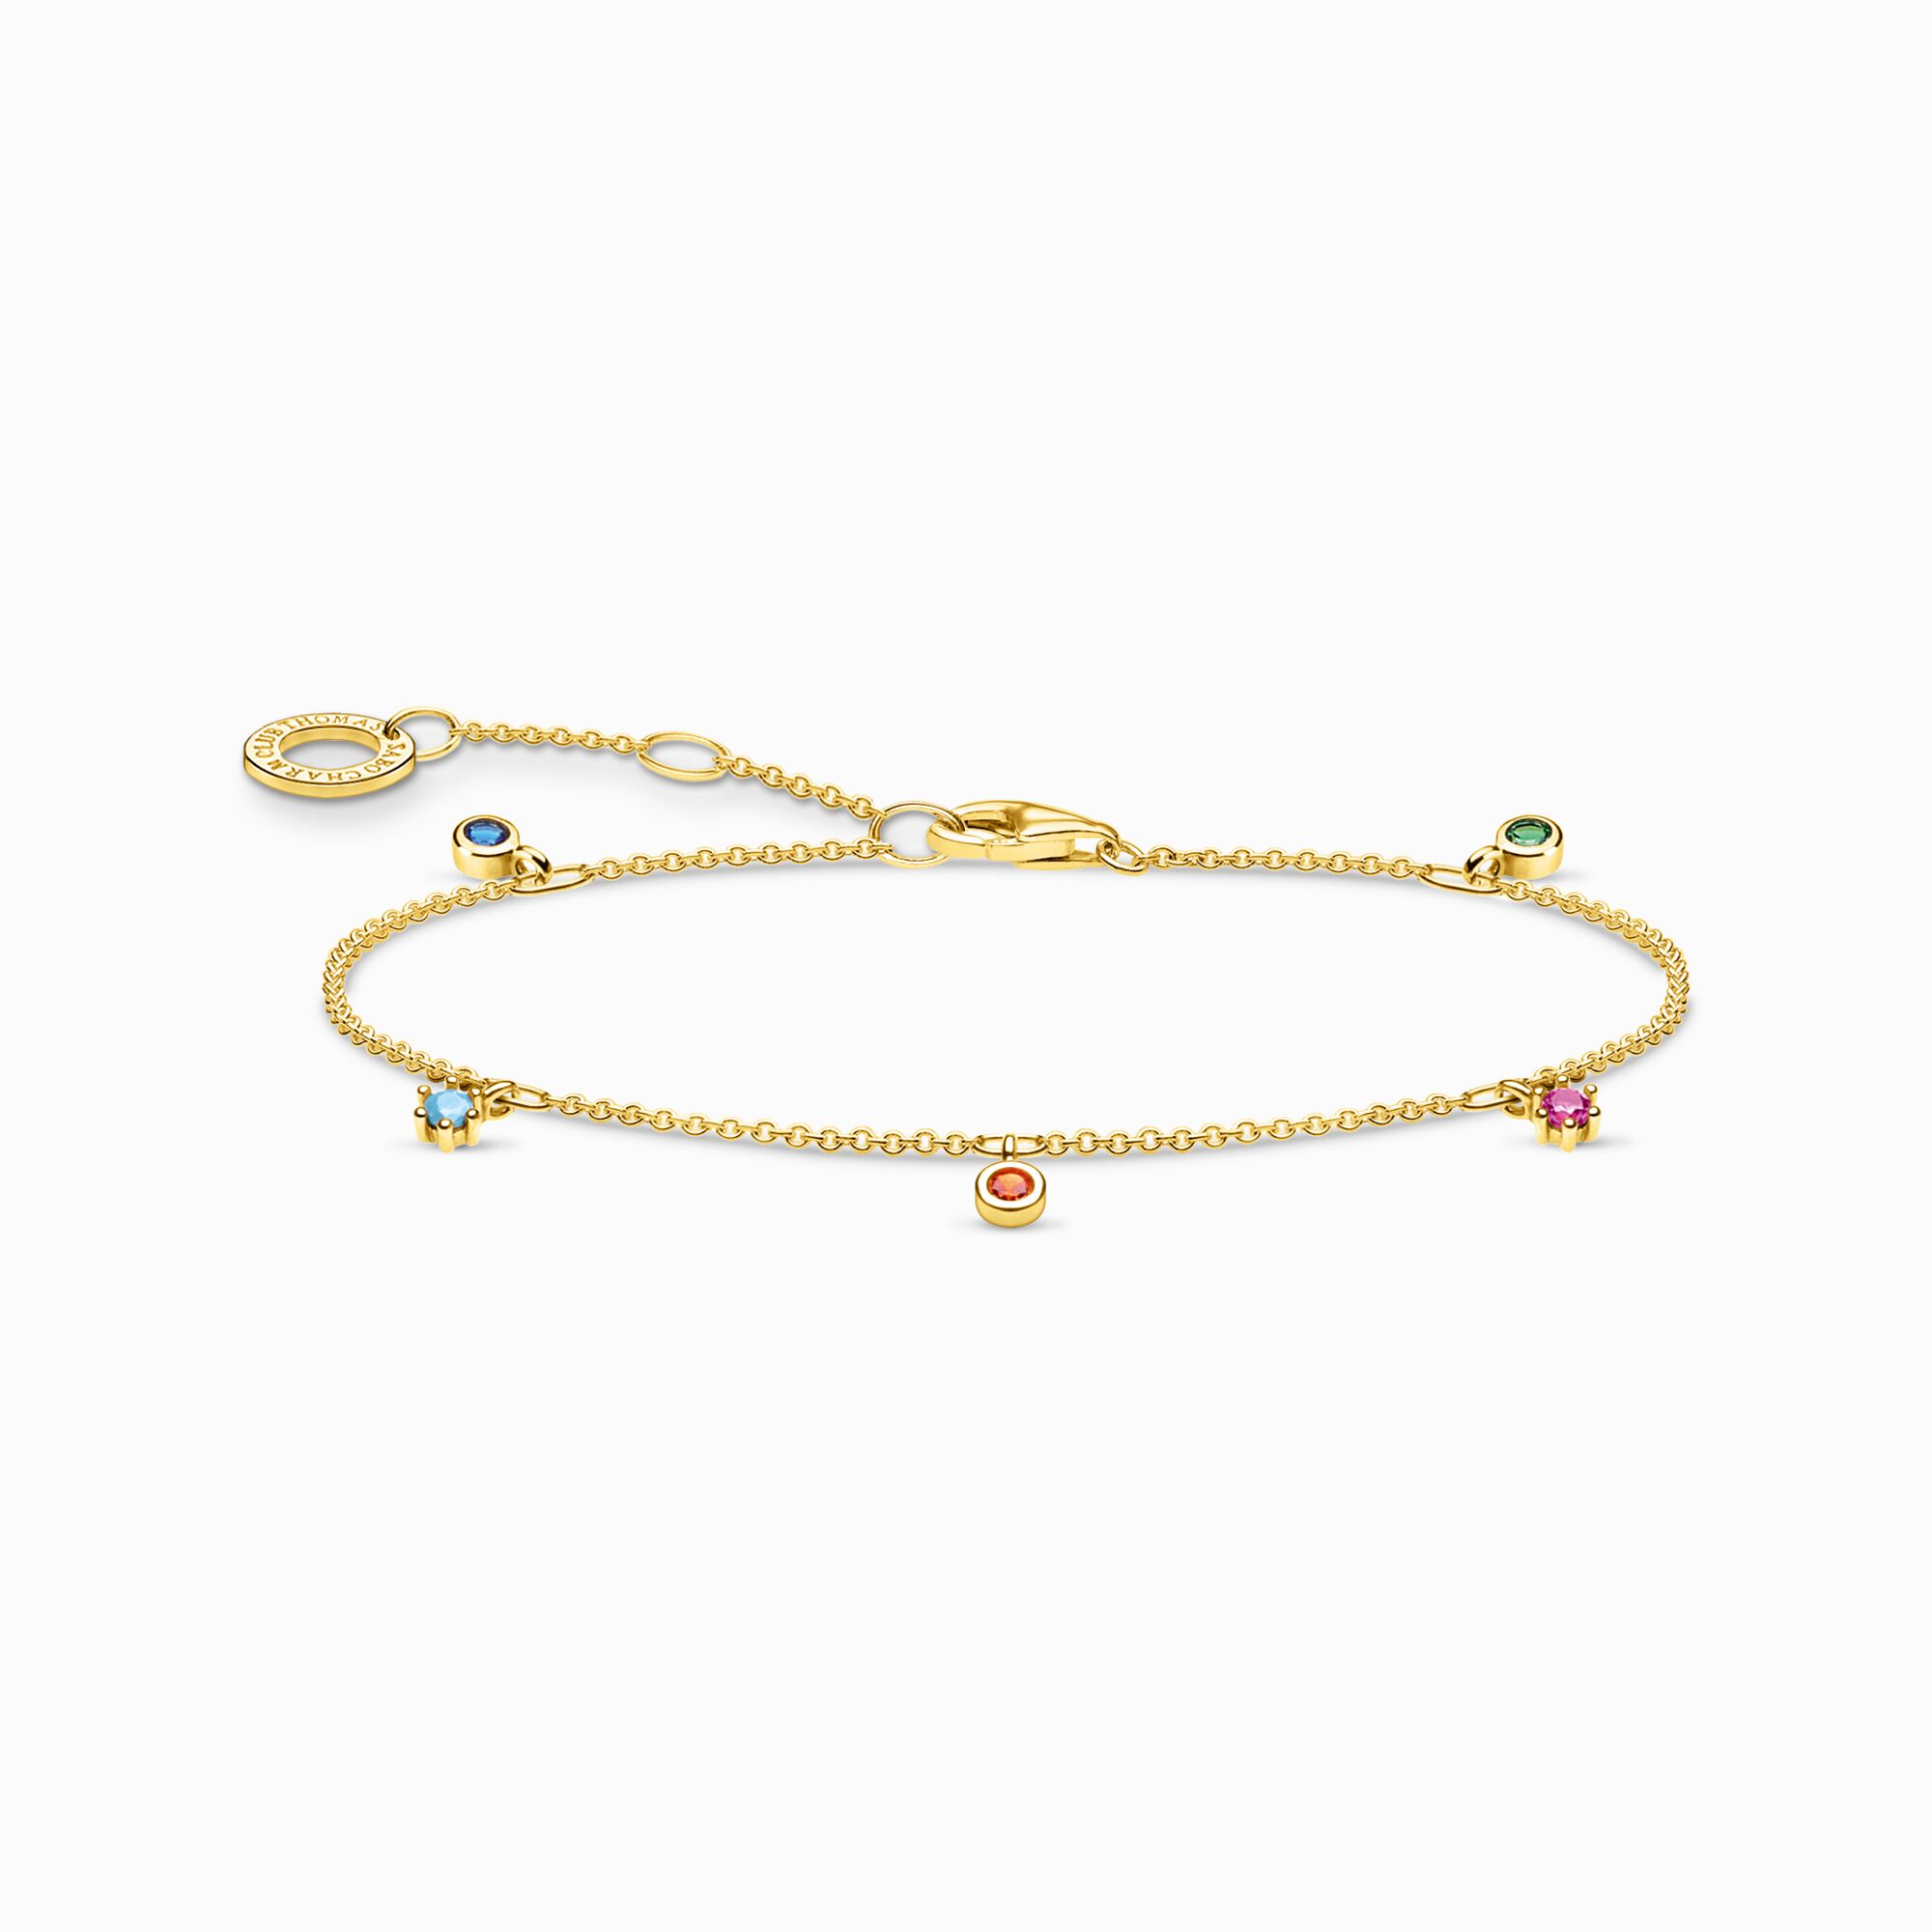 Thomas Sabo + Gold Bracelet With Colourful Stones